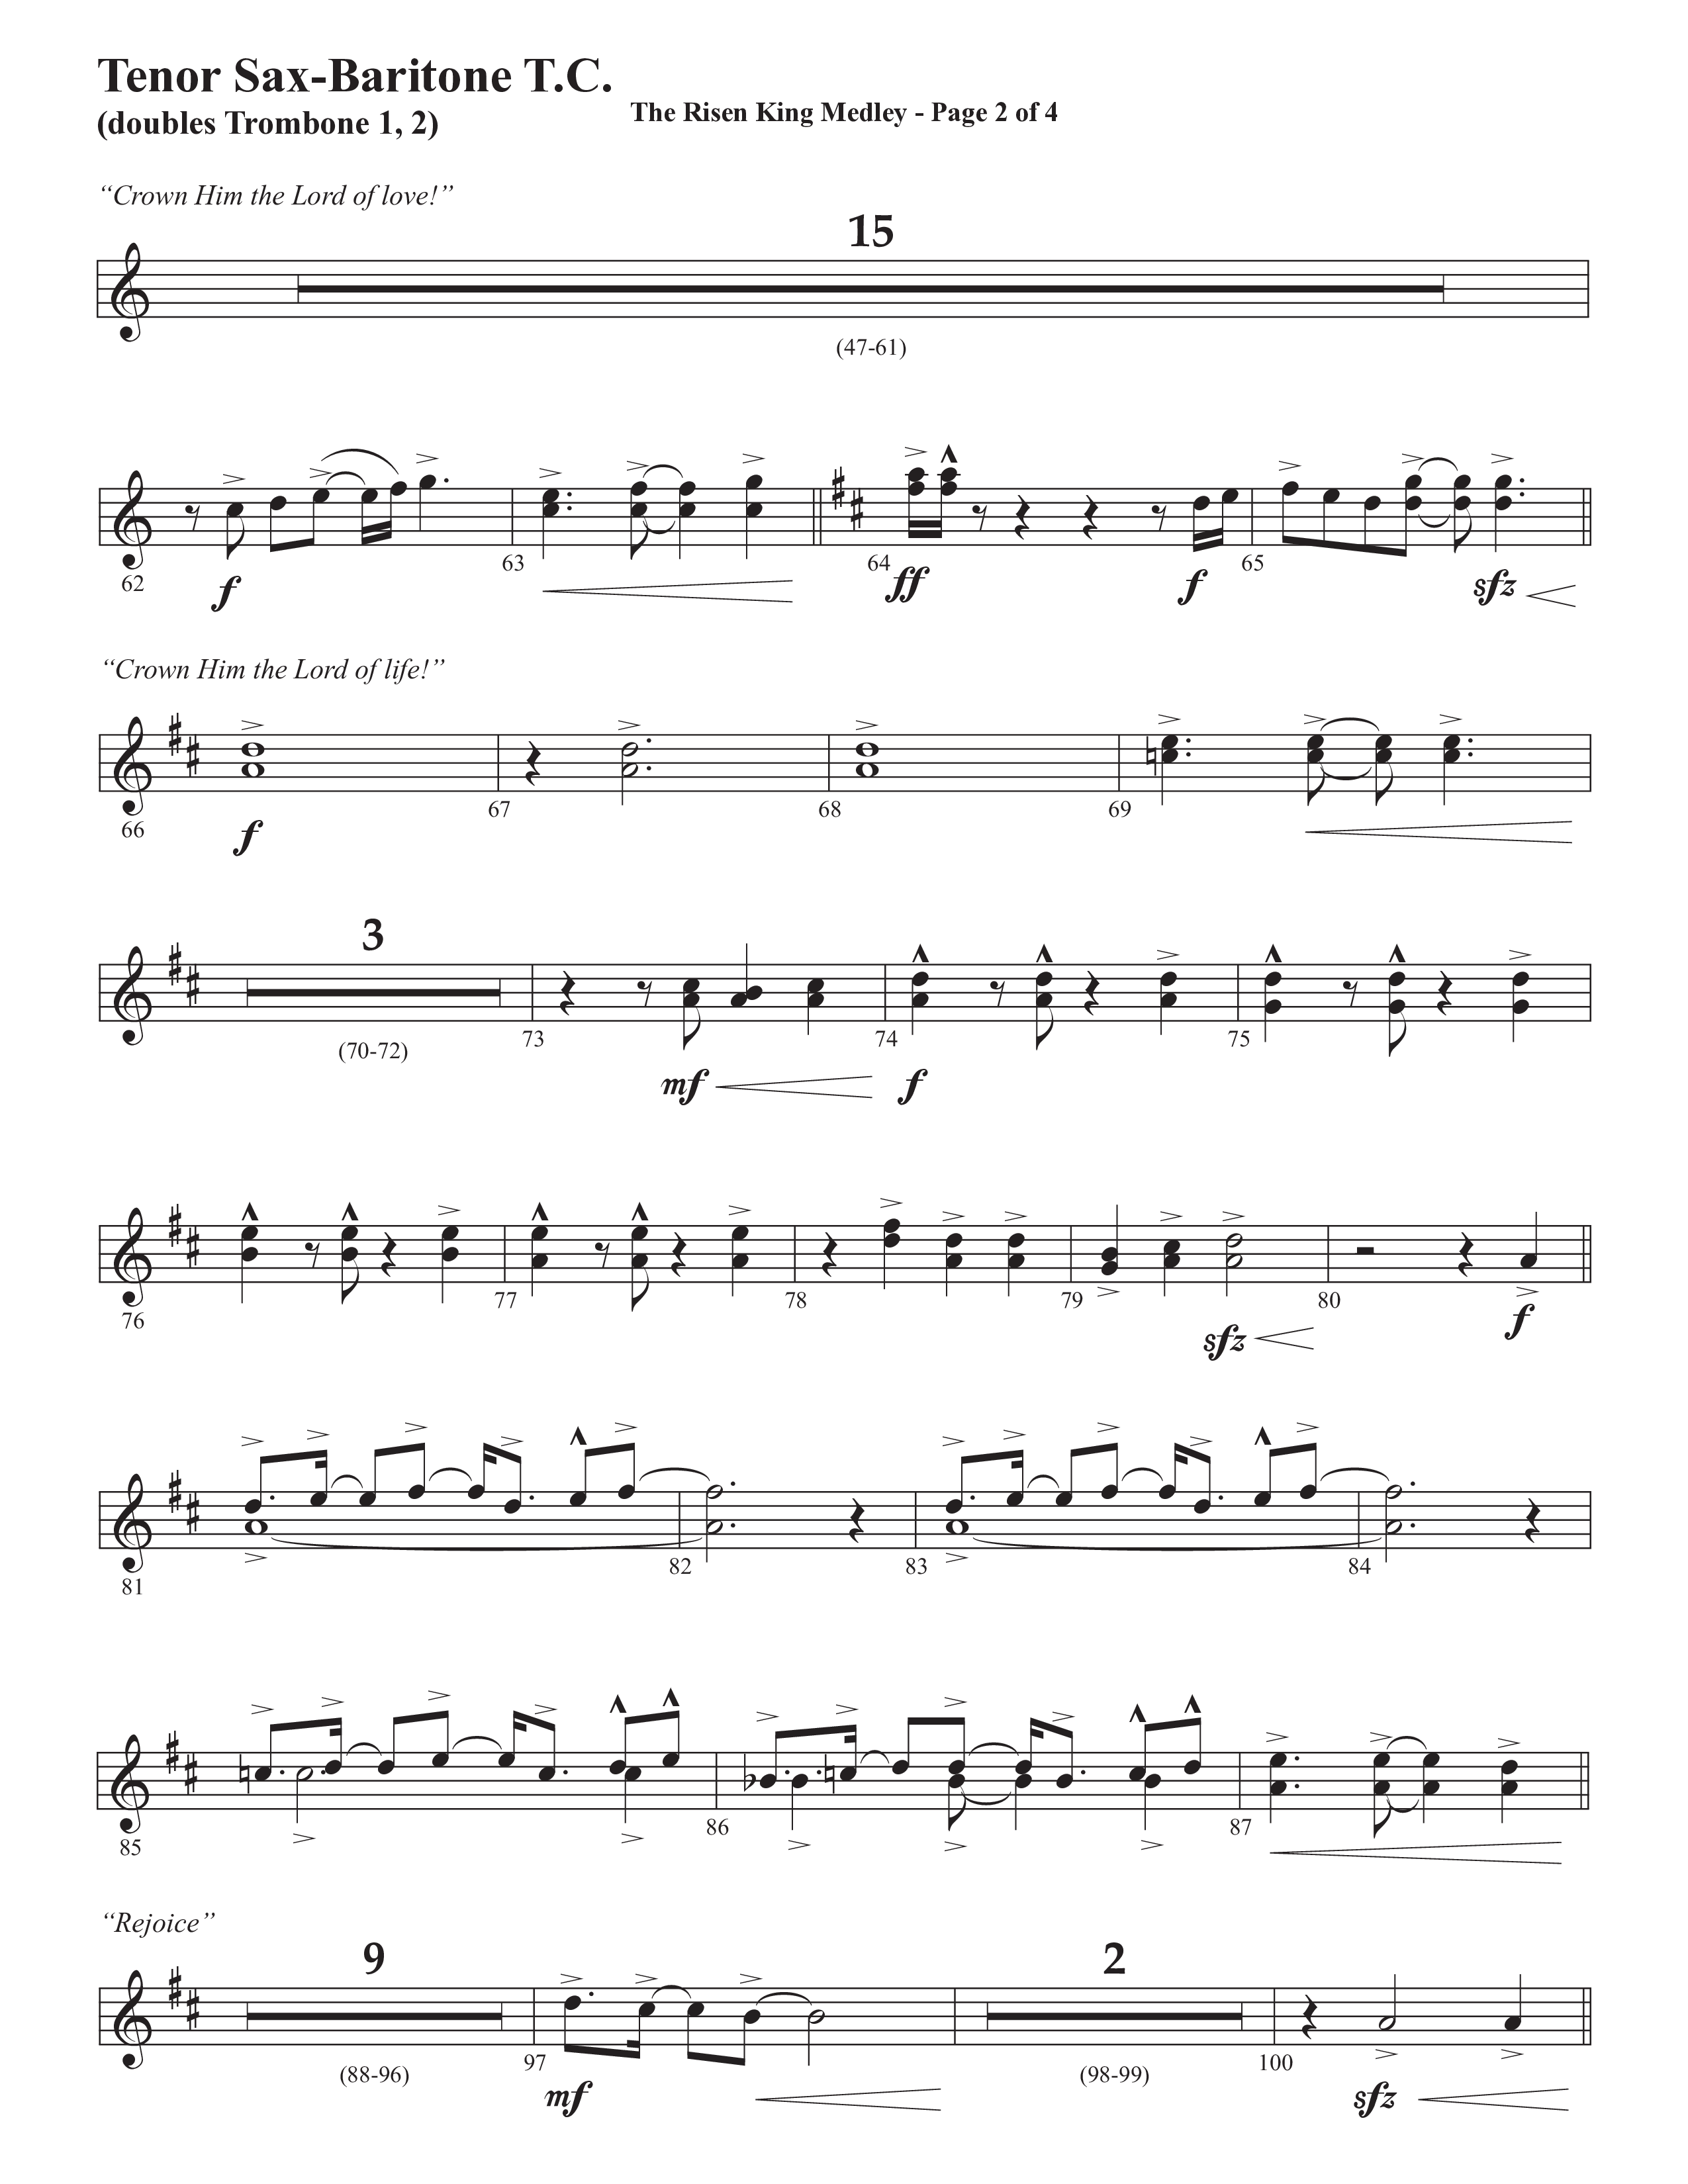 The Risen King Medley (Choral Anthem SATB) Tenor Sax/Baritone T.C. (Semsen Music / Arr. John Bolin / Orch. Cliff Duren)